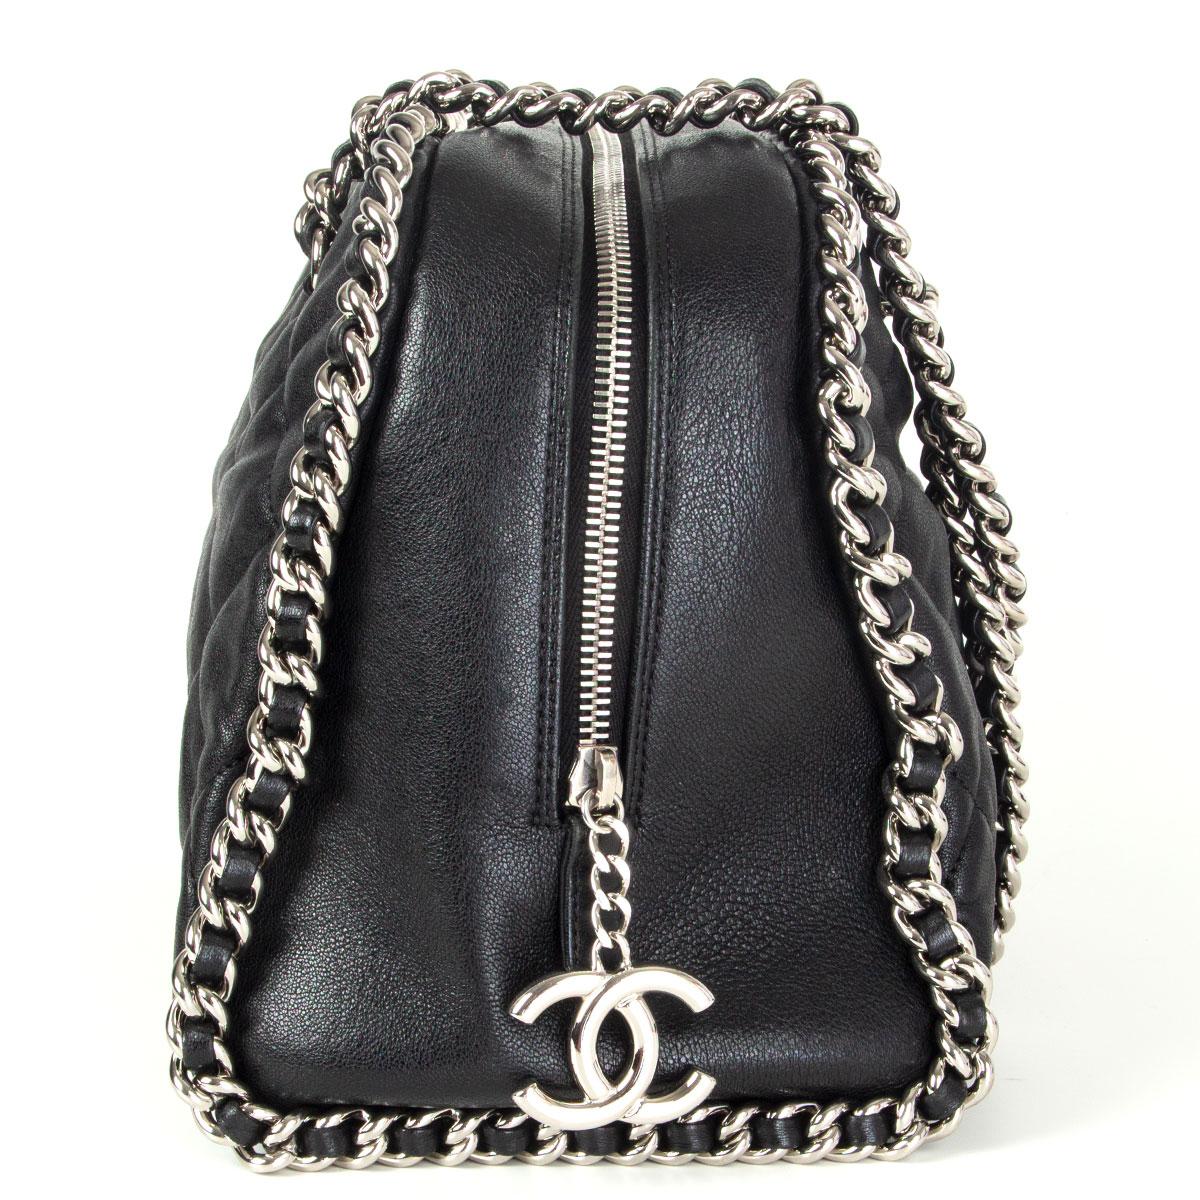 chanel black handbag chain strap